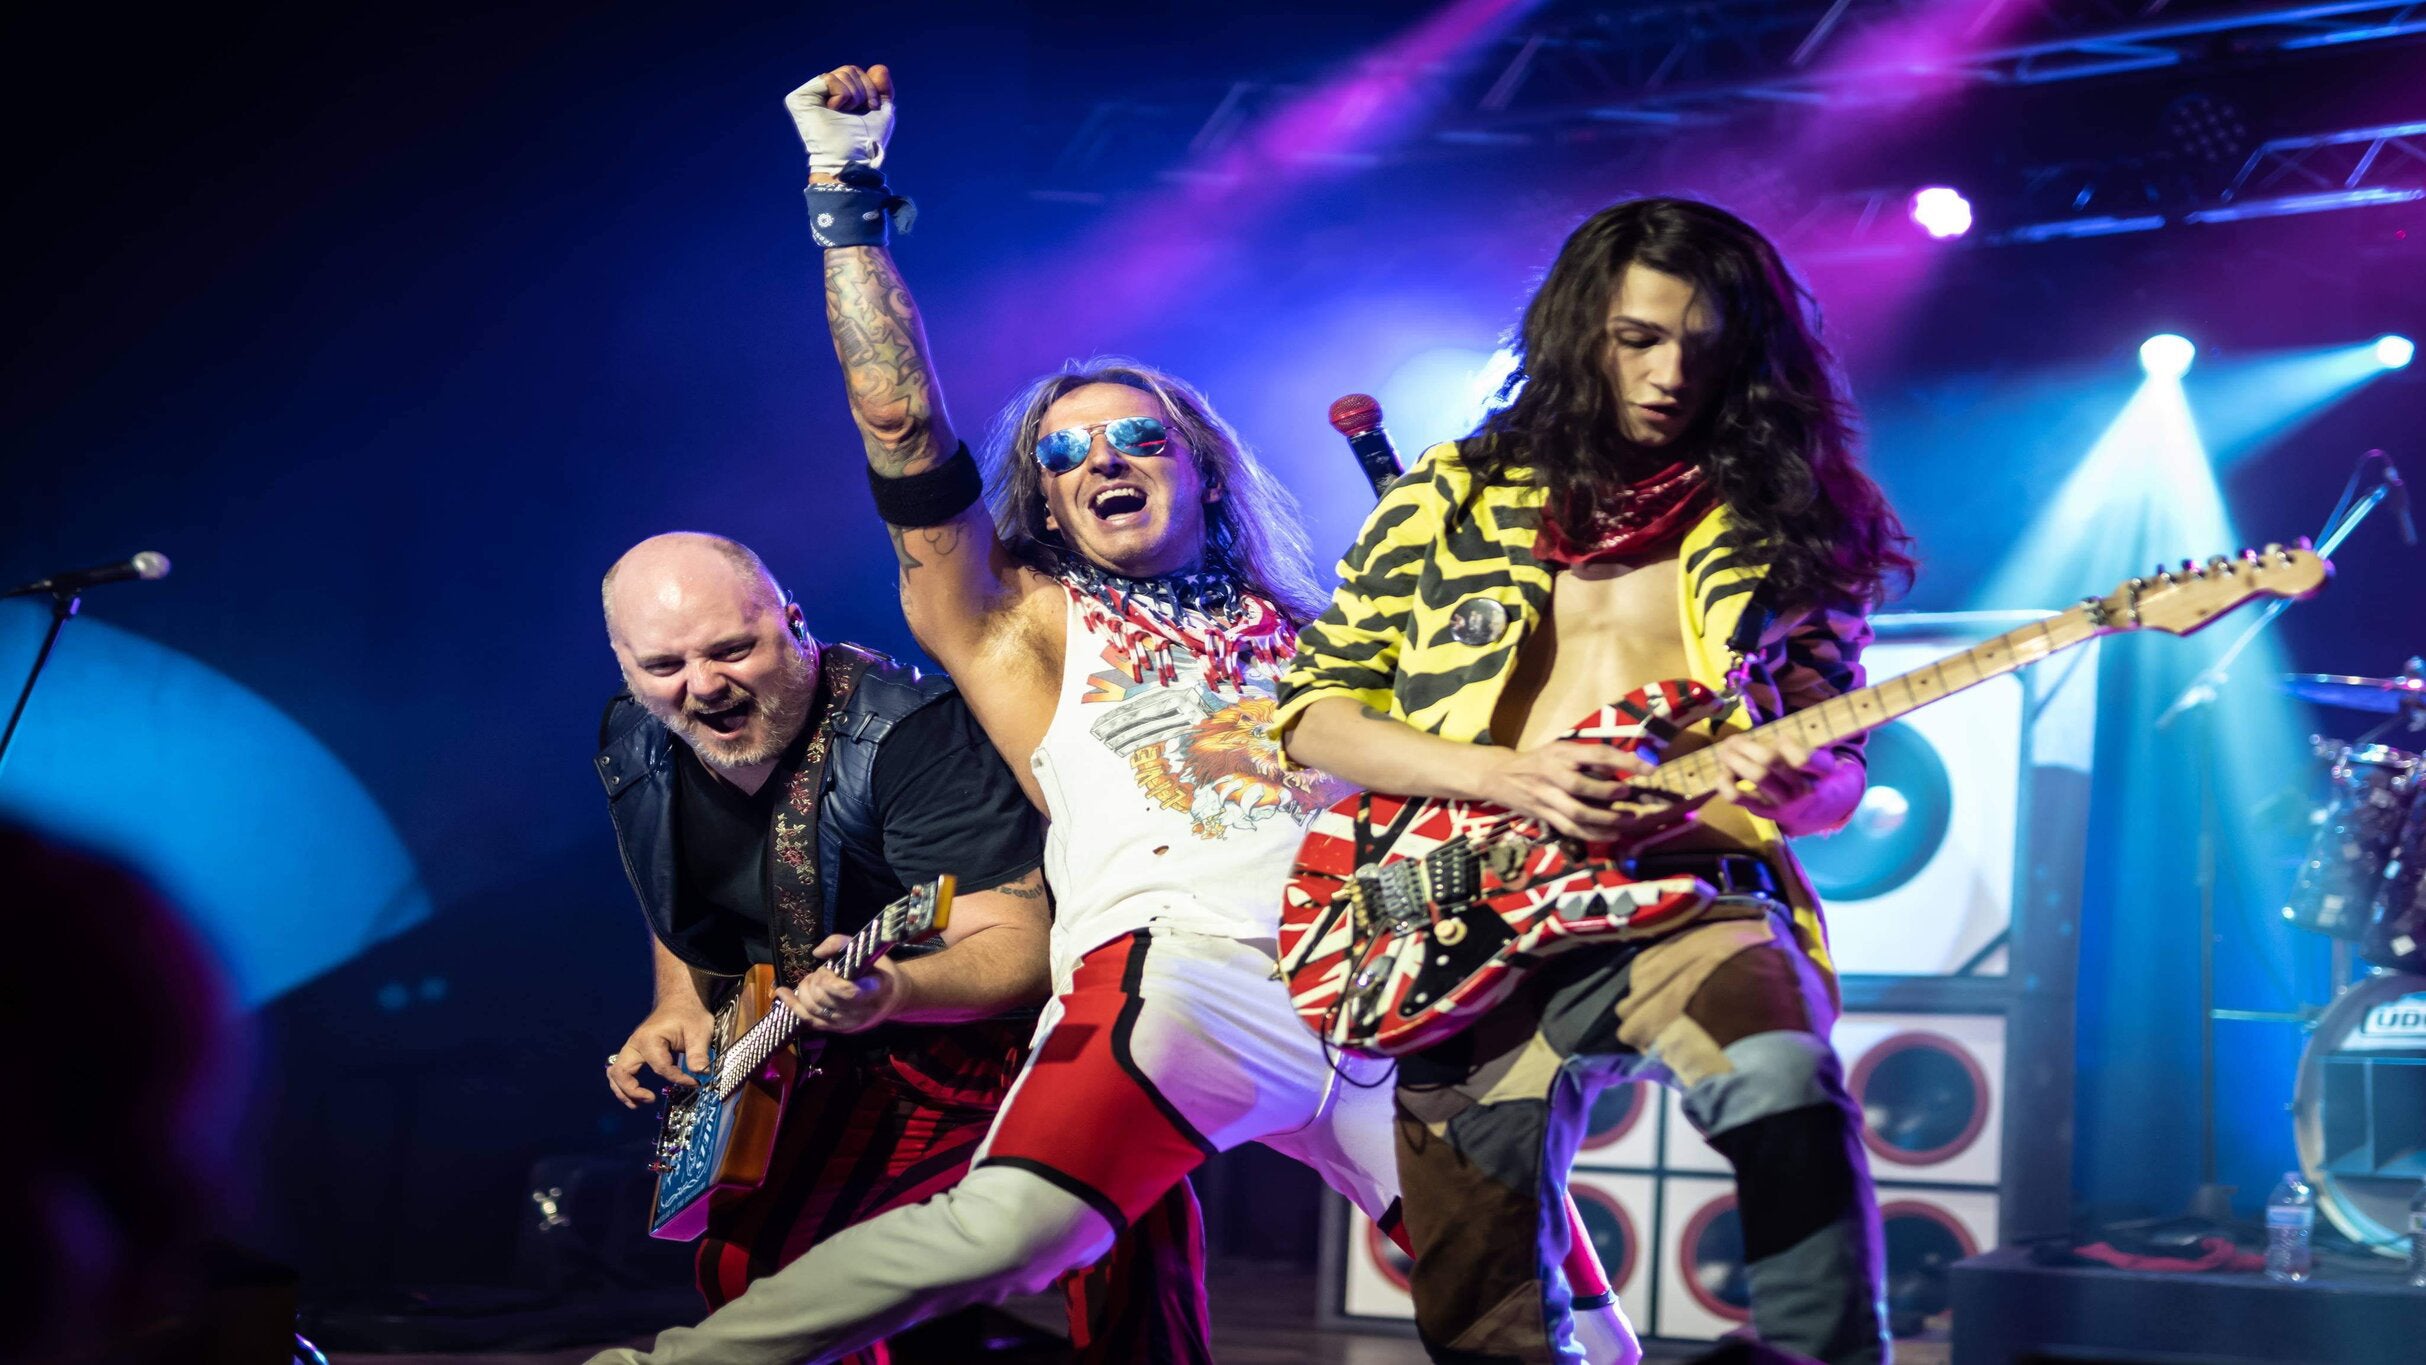 84 - Van Halen Tribute & Excitable - Def Leppard Tribute in Orlando promo photo for Official Platinum presale offer code